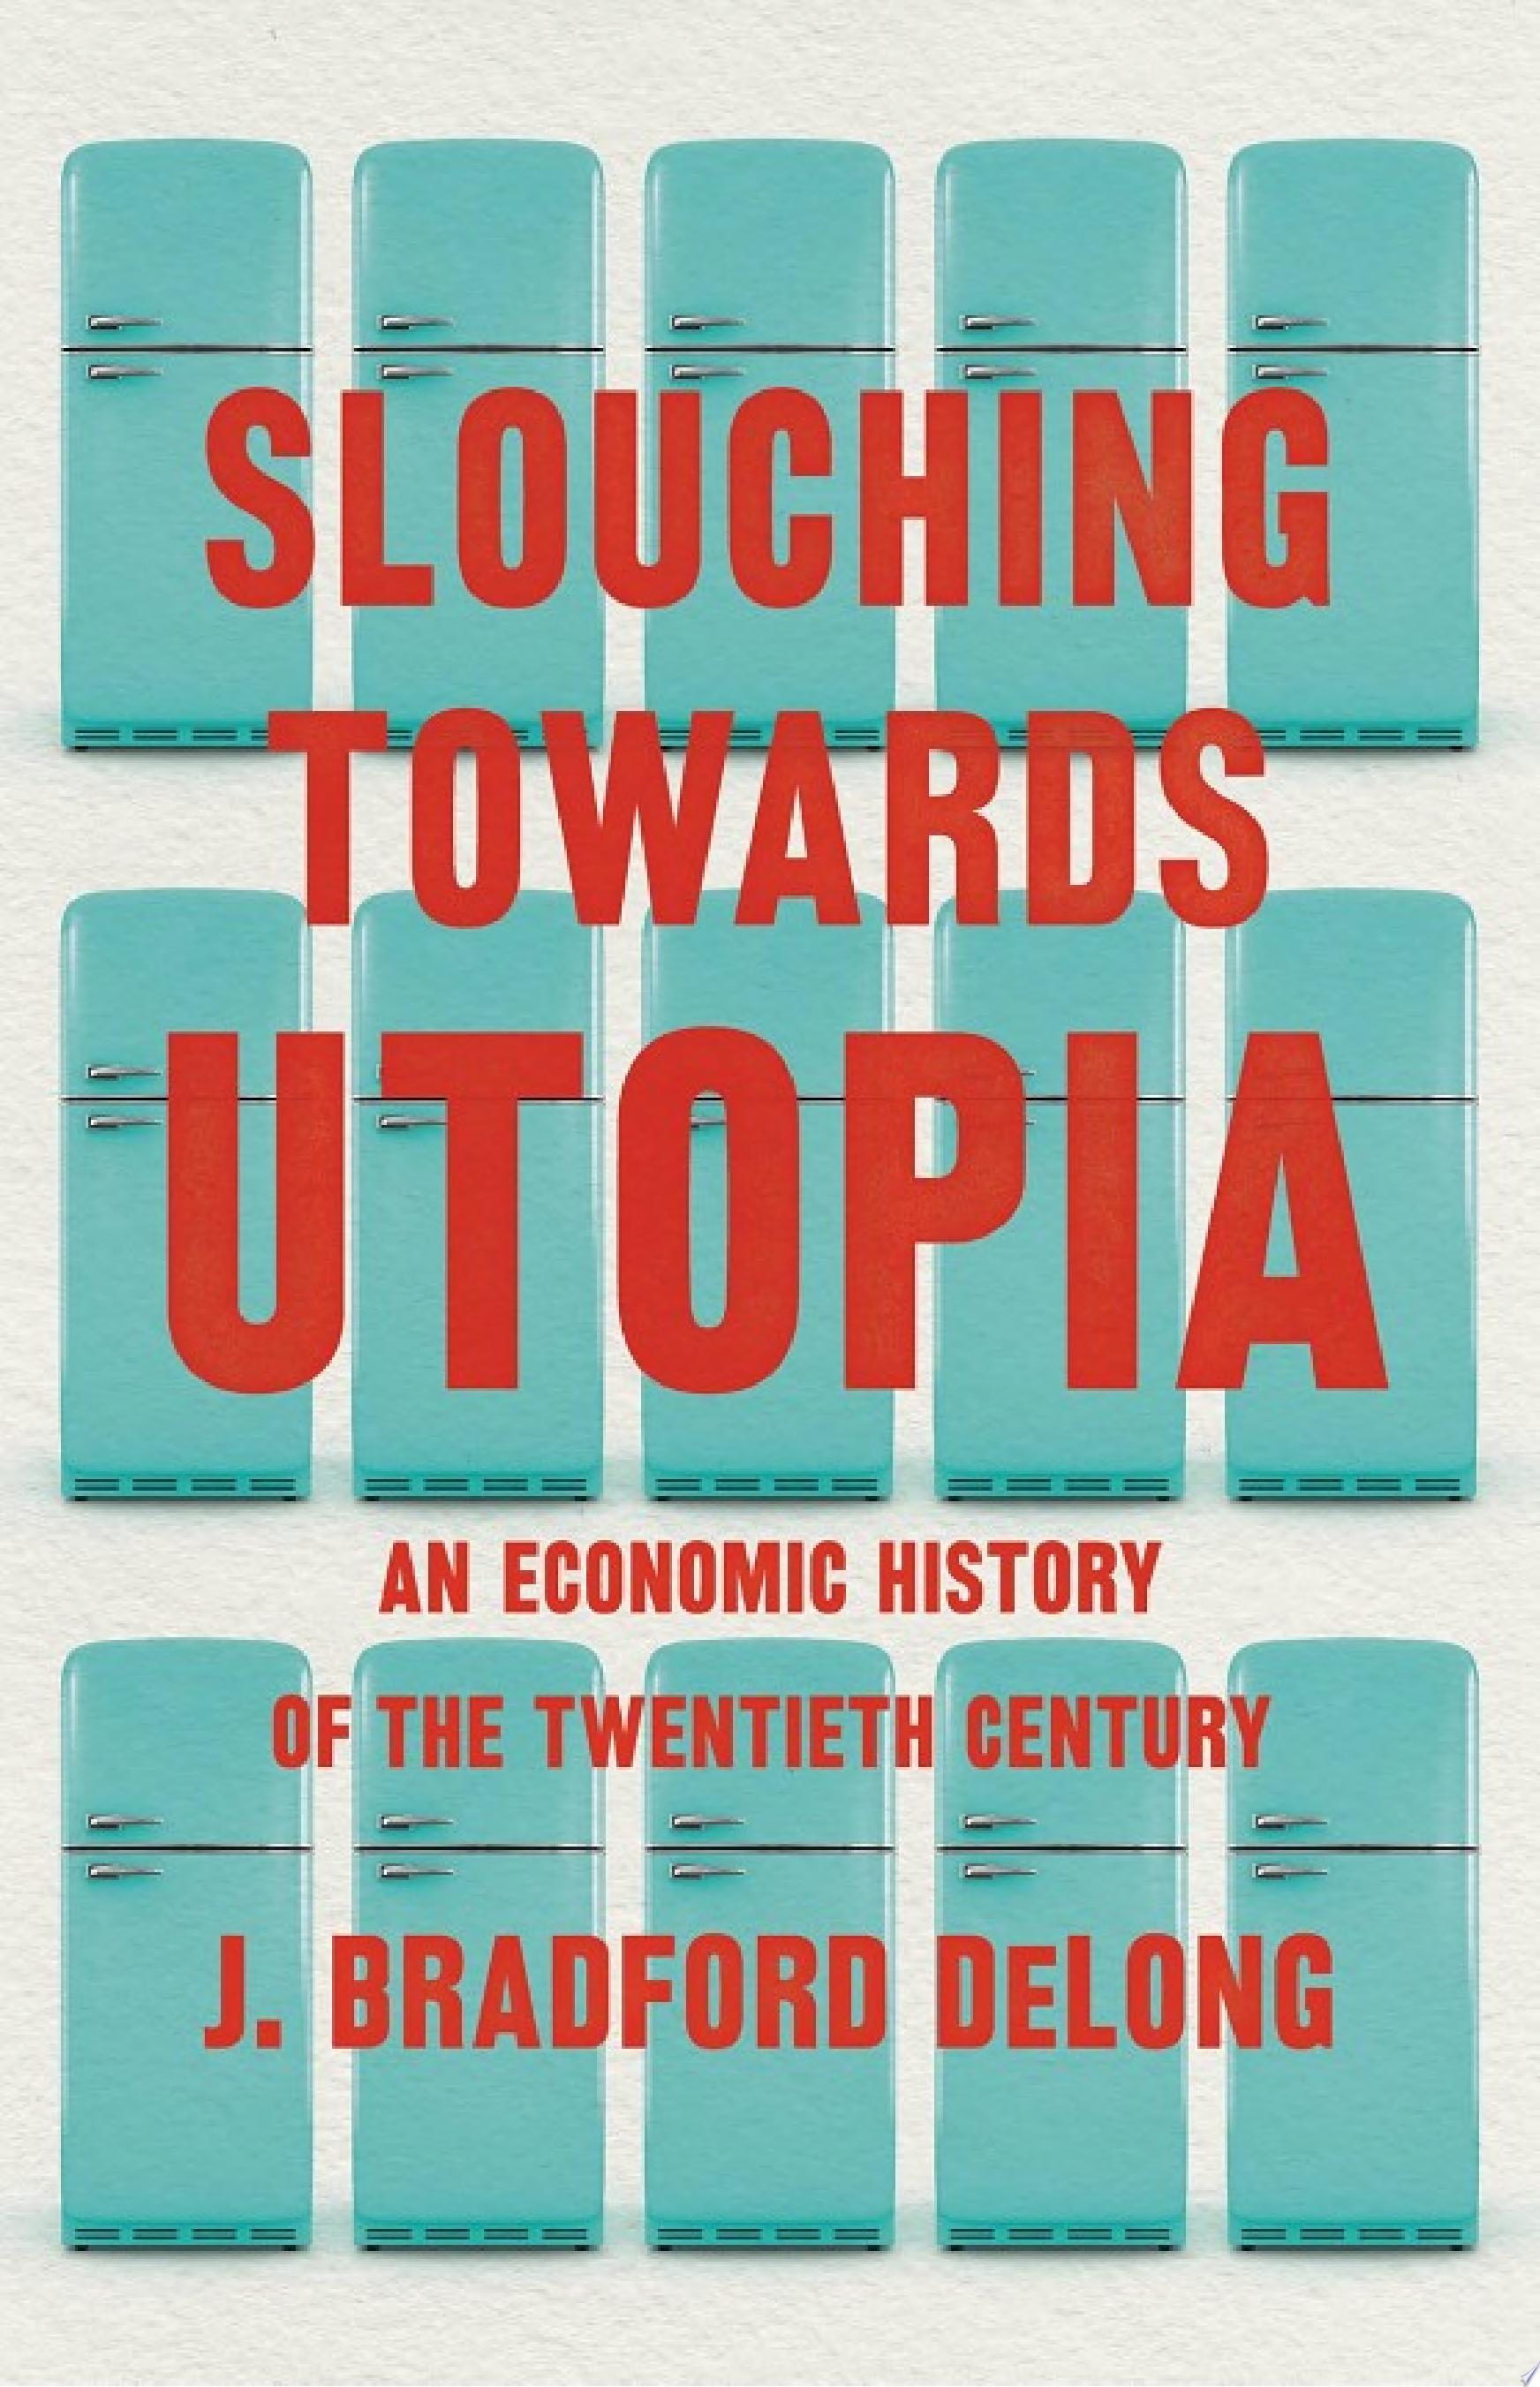 Image for "Slouching Towards Utopia"